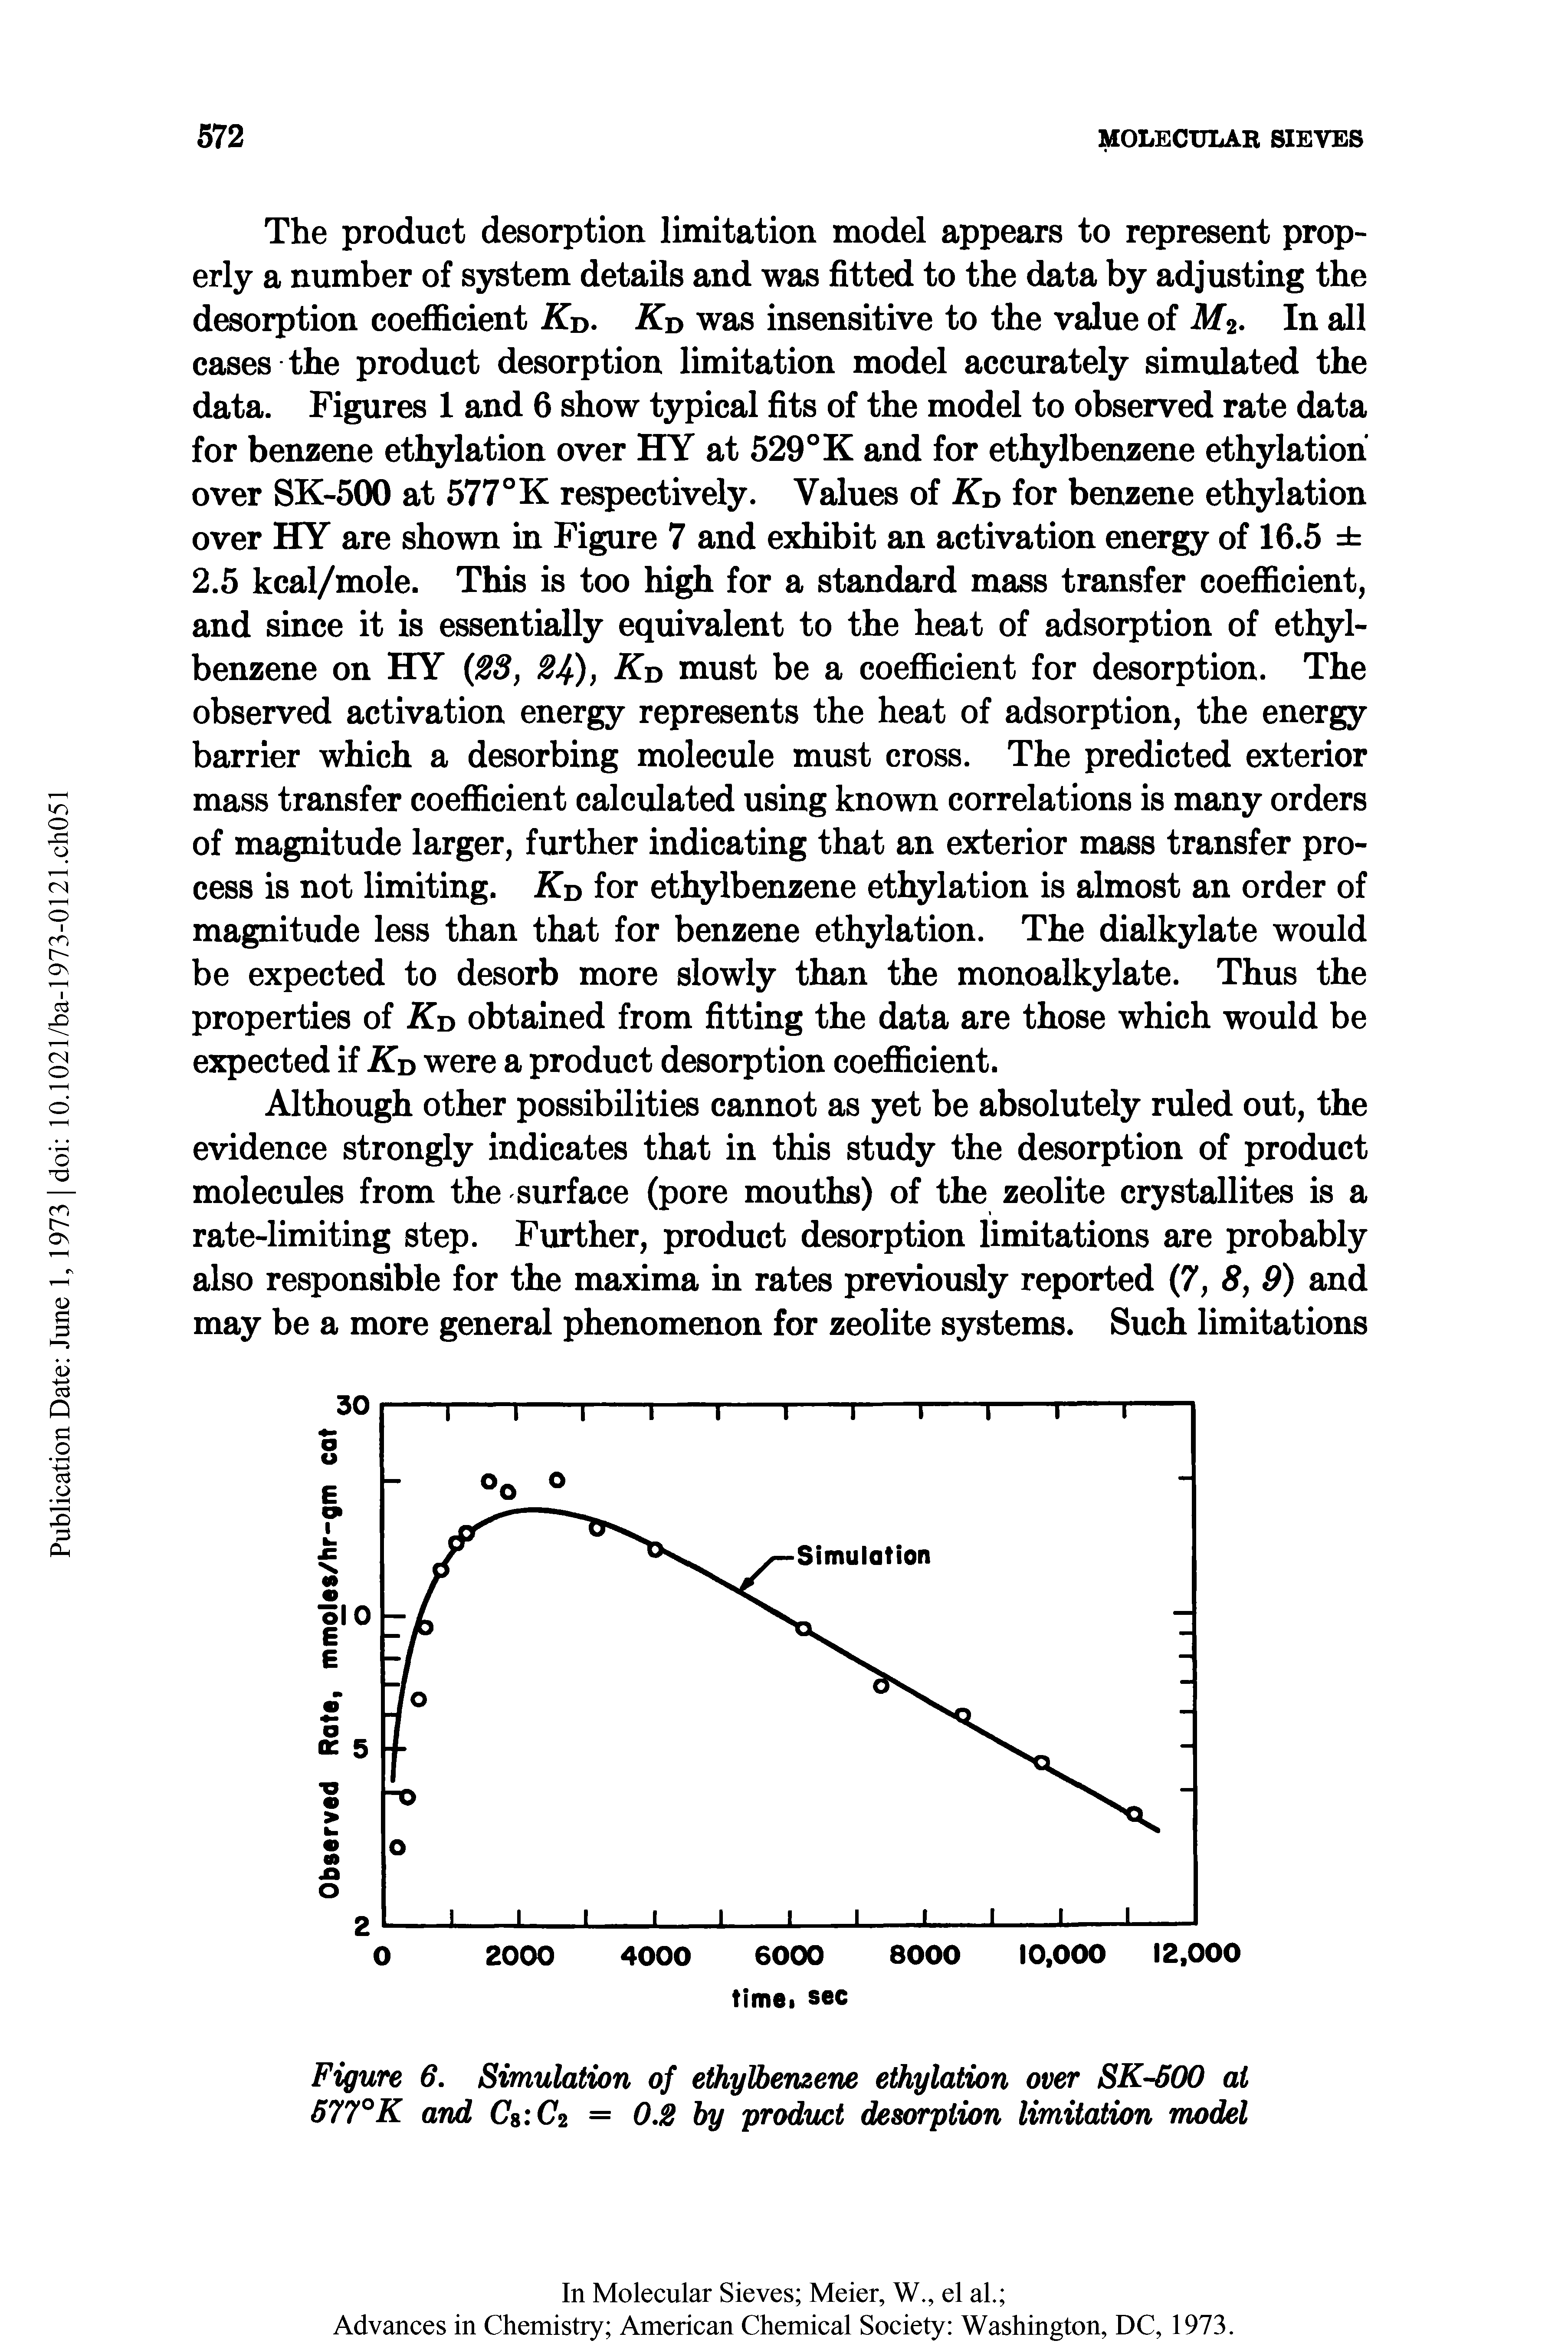 Figure 6. Simulation of ethylbenzene ethylation over SK-600 at 577°K and C8 C2 = 0.2 by product desorption limitation model...